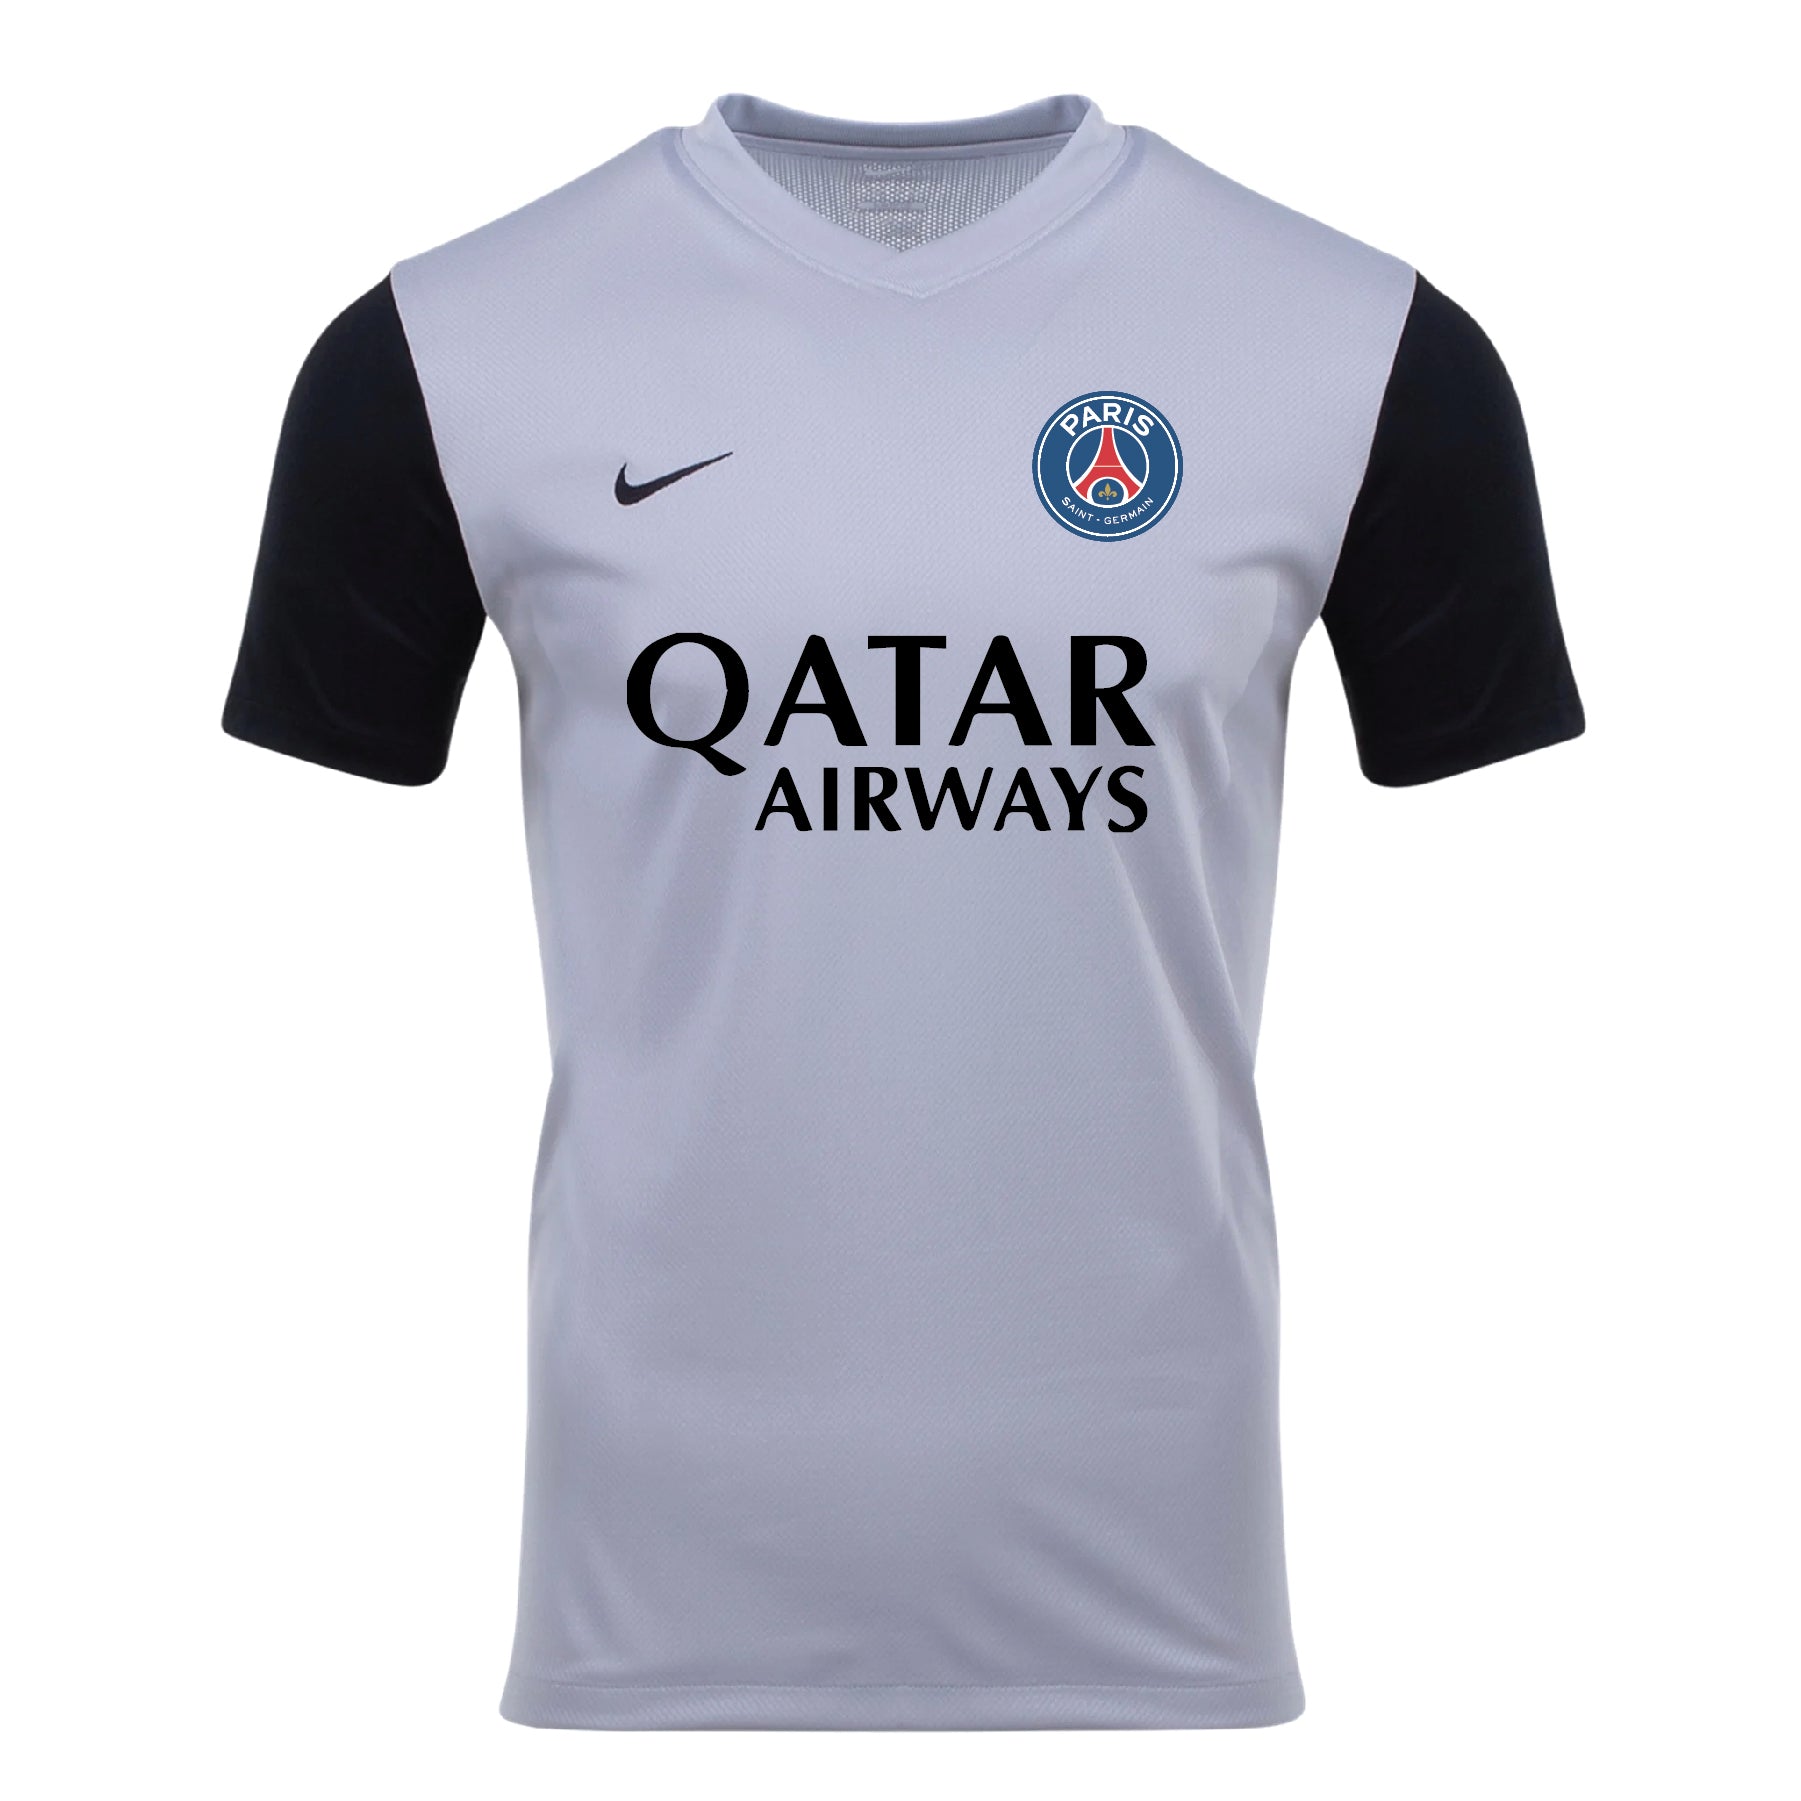 Paris Saint-Germain Away football shirt 2008 - 2009. Sponsored by